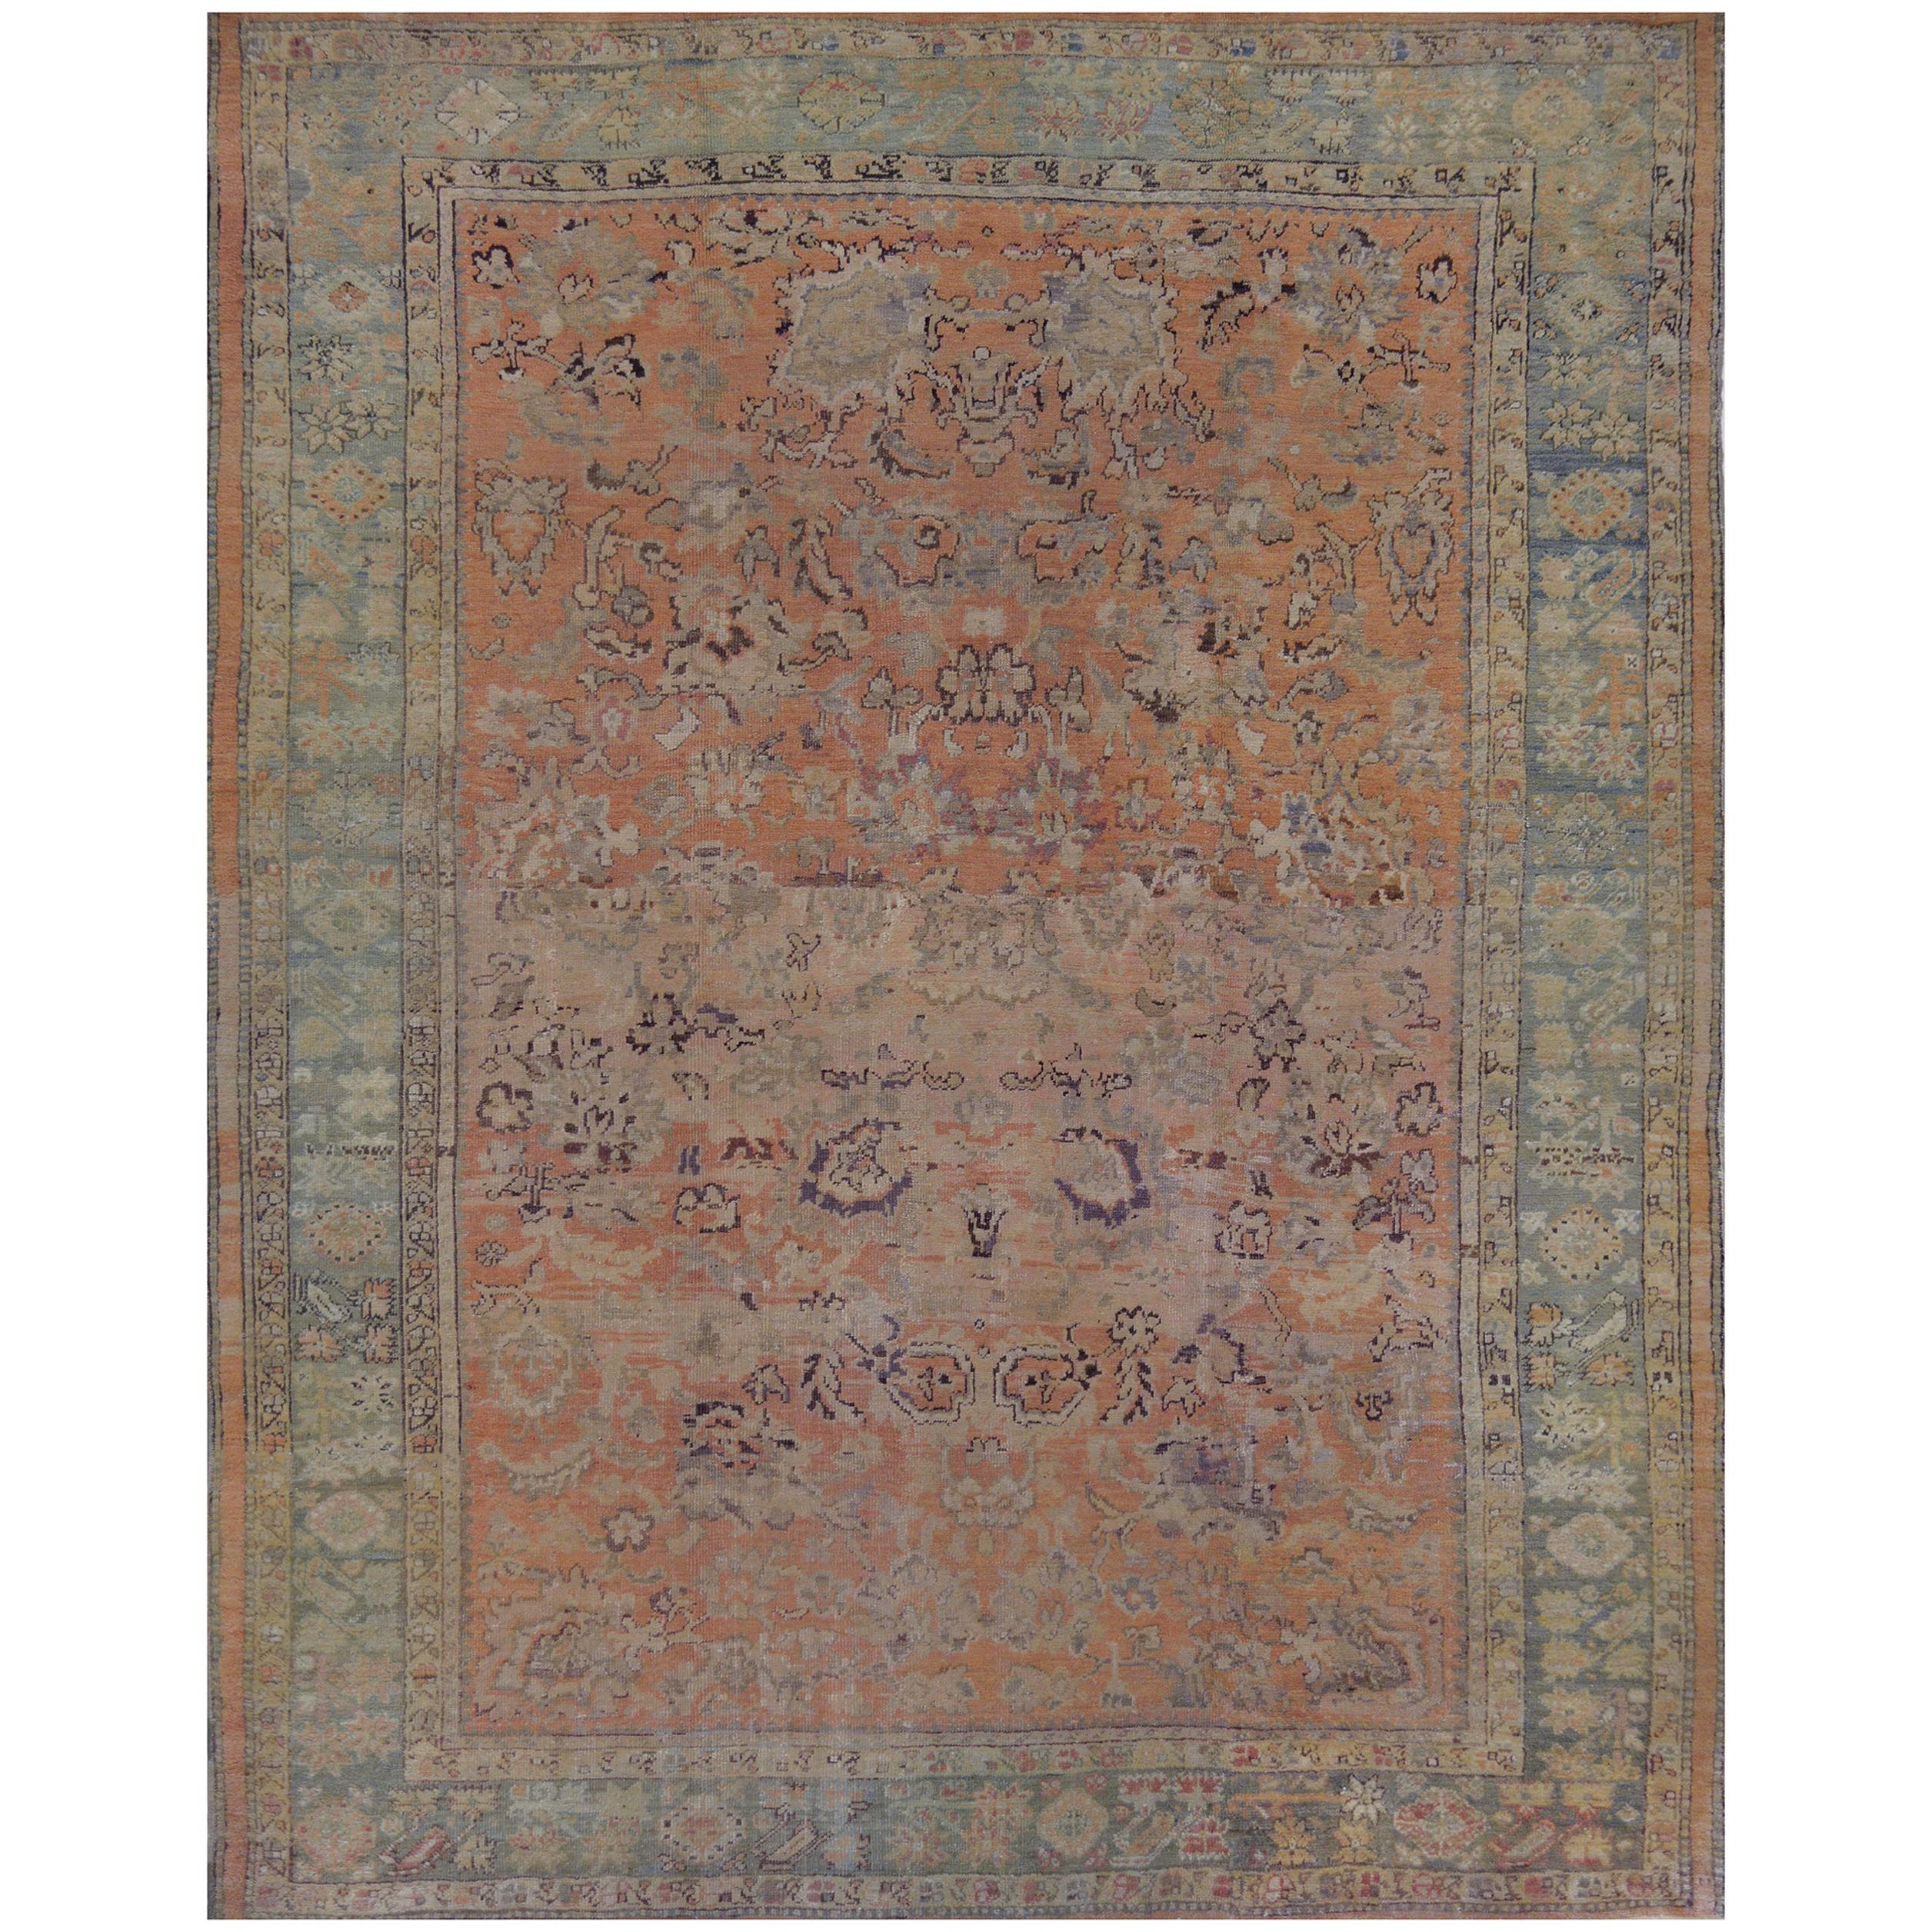 Antiker handgewebter Oushak-Teppich aus Wolle